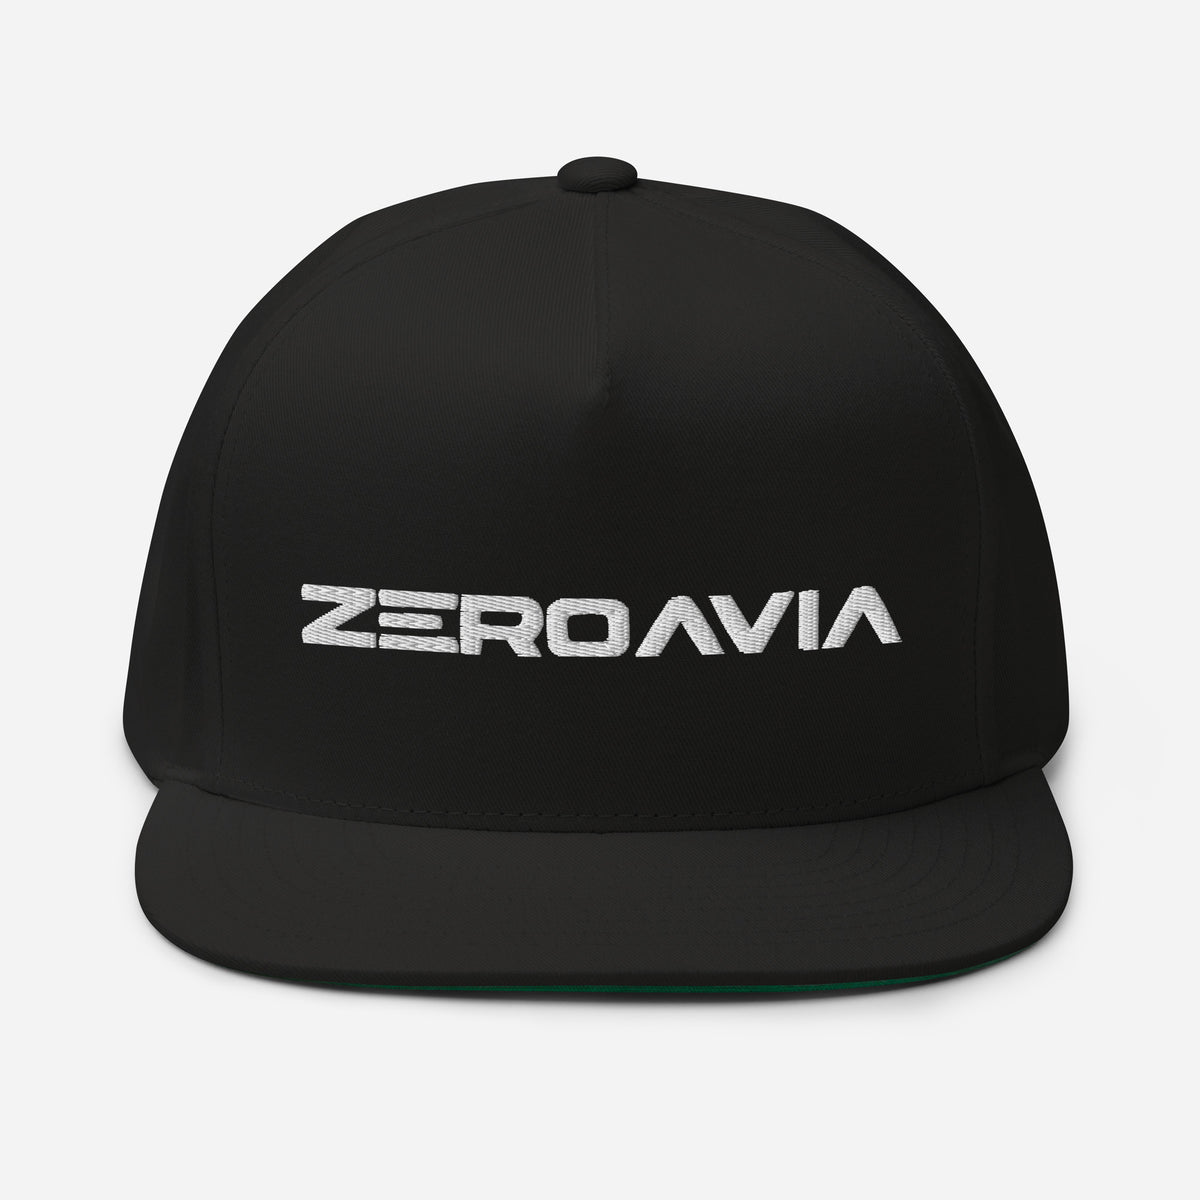 ZeroAvia Flat Bill Cap